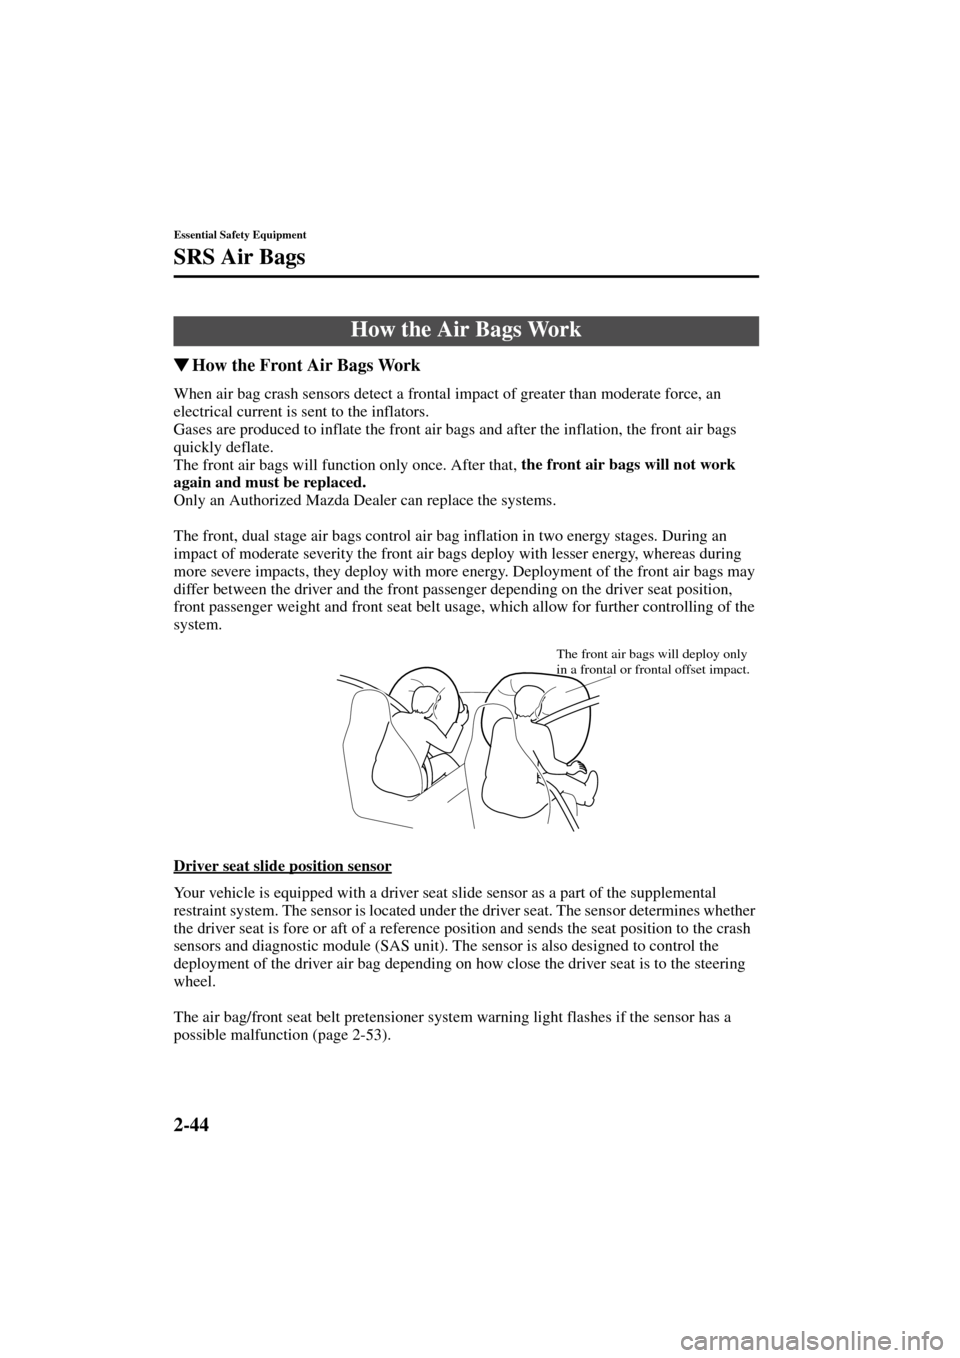 MAZDA MODEL 3 HATCHBACK 2004   (in English) Workshop Manual 2-44
Essential Safety Equipment
SRS Air Bags
Form No. 8S18-EA-03I
How the Front Air Bags Work
When air bag crash sensors detect a frontal impact of greater than moderate force, an 
electrical current